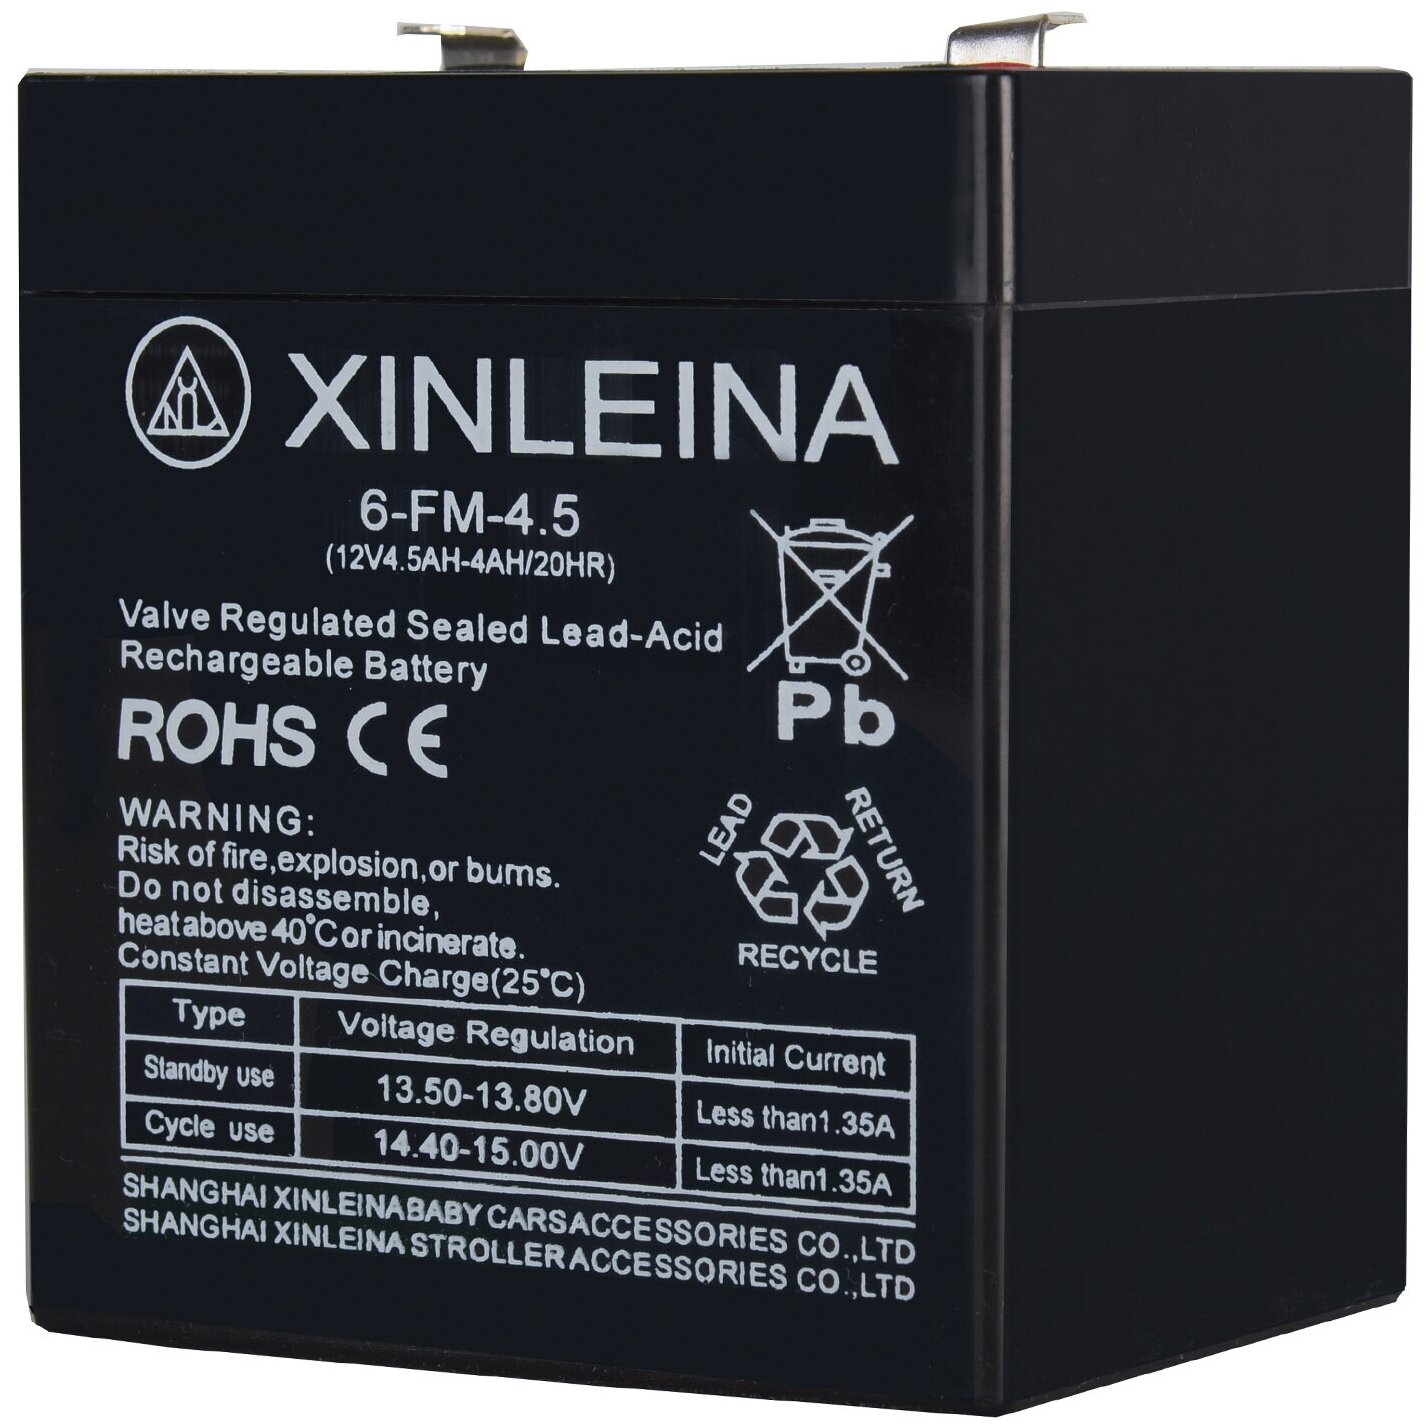 Аккумулятор XINLEINA 12V 4.5-4Ah/20Hr - 6-FM-4.5 (6-FM-4.5)